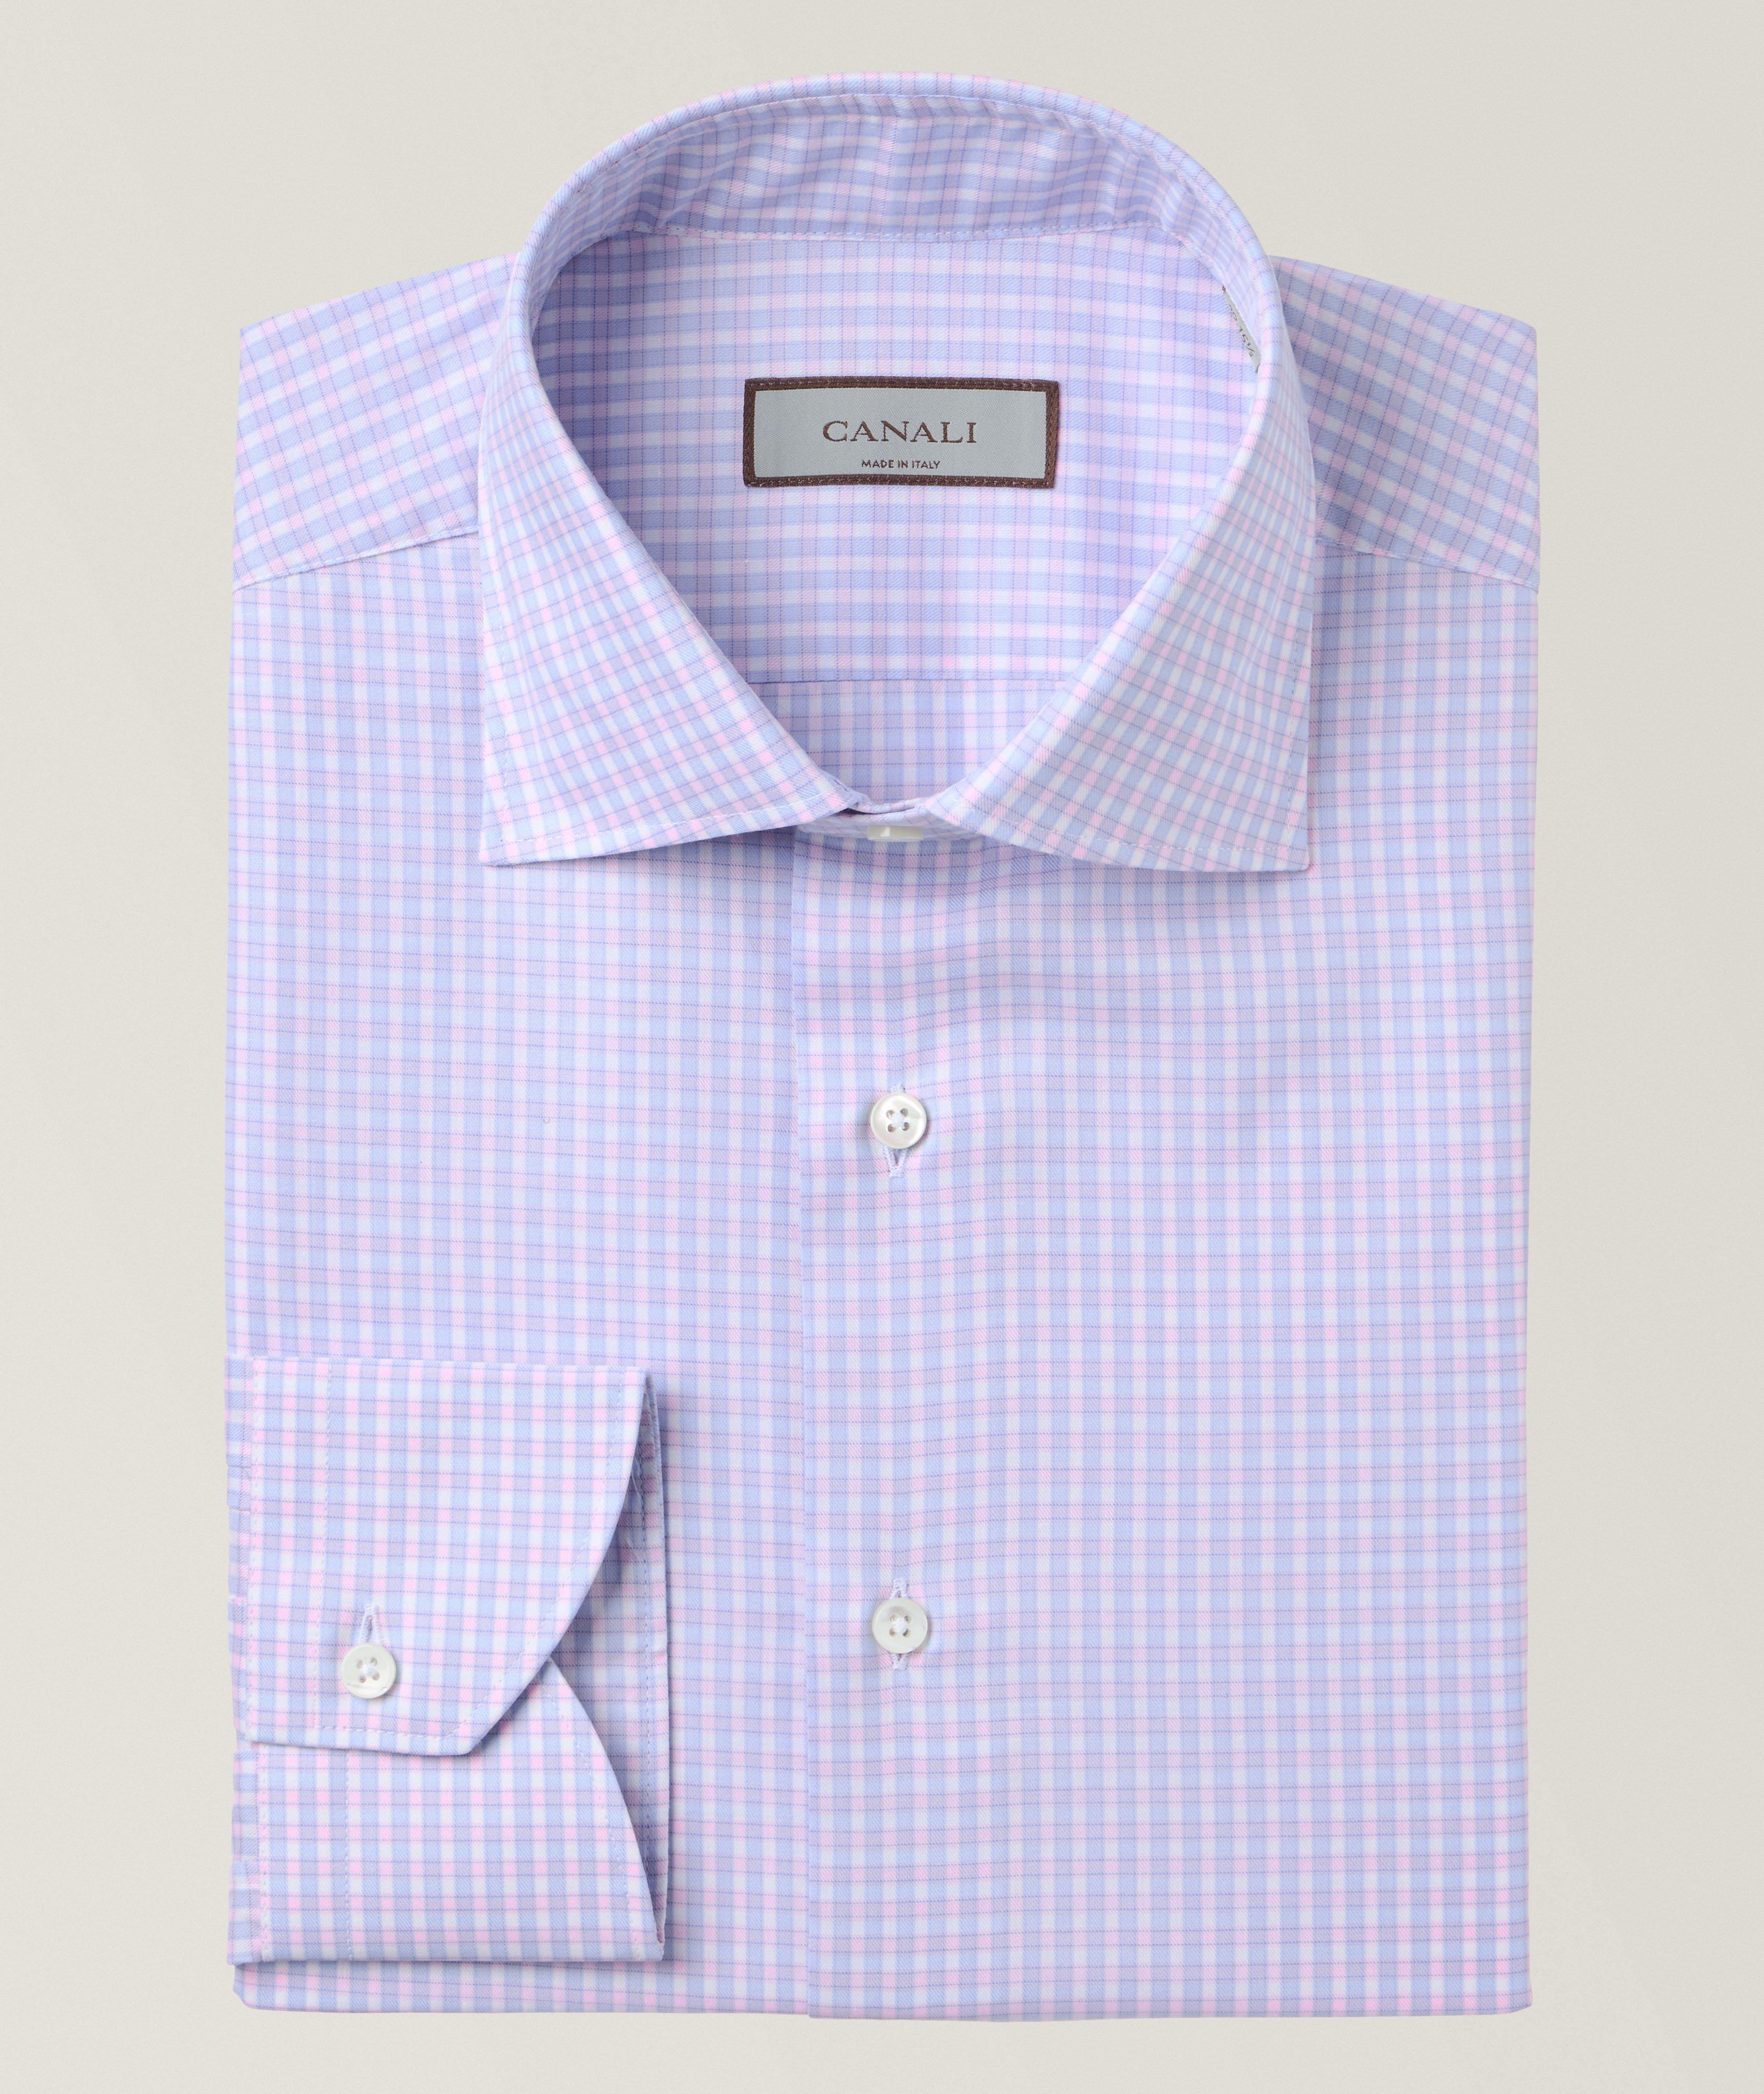 Purple Brand Circulating Distressed Logo Cotton T-Shirt